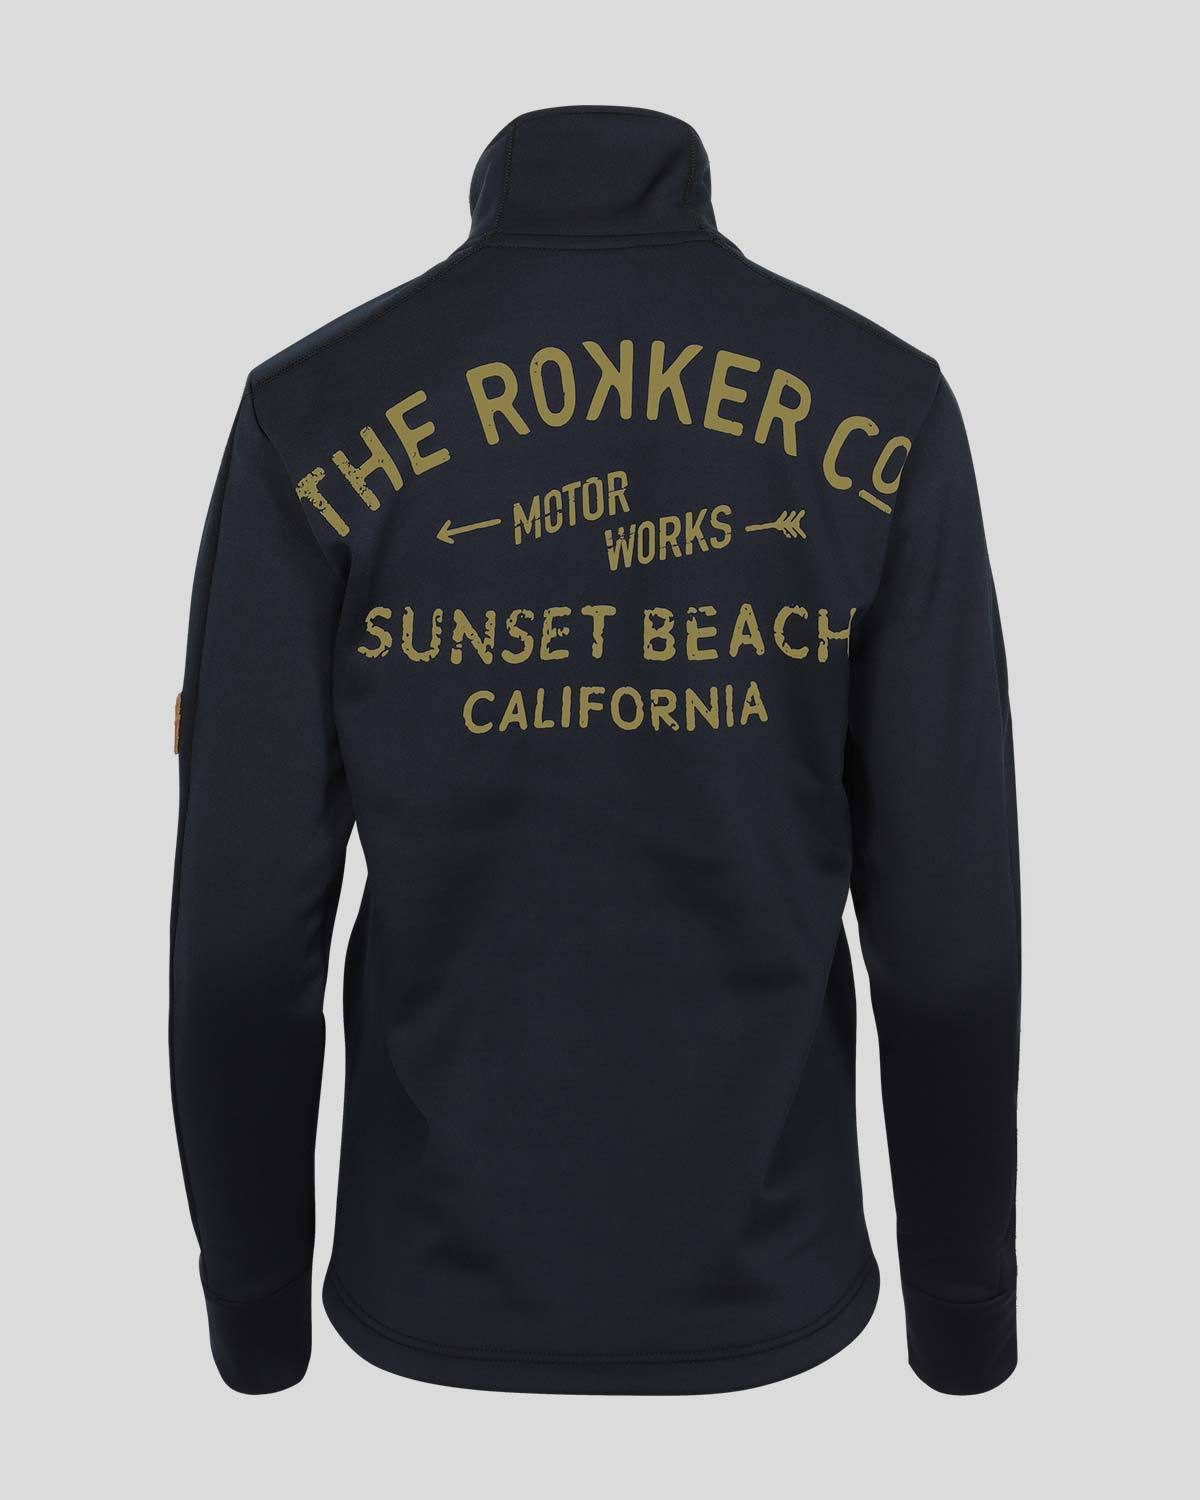 Soft Shell Sunset Beach Jacket The Rokker Company 